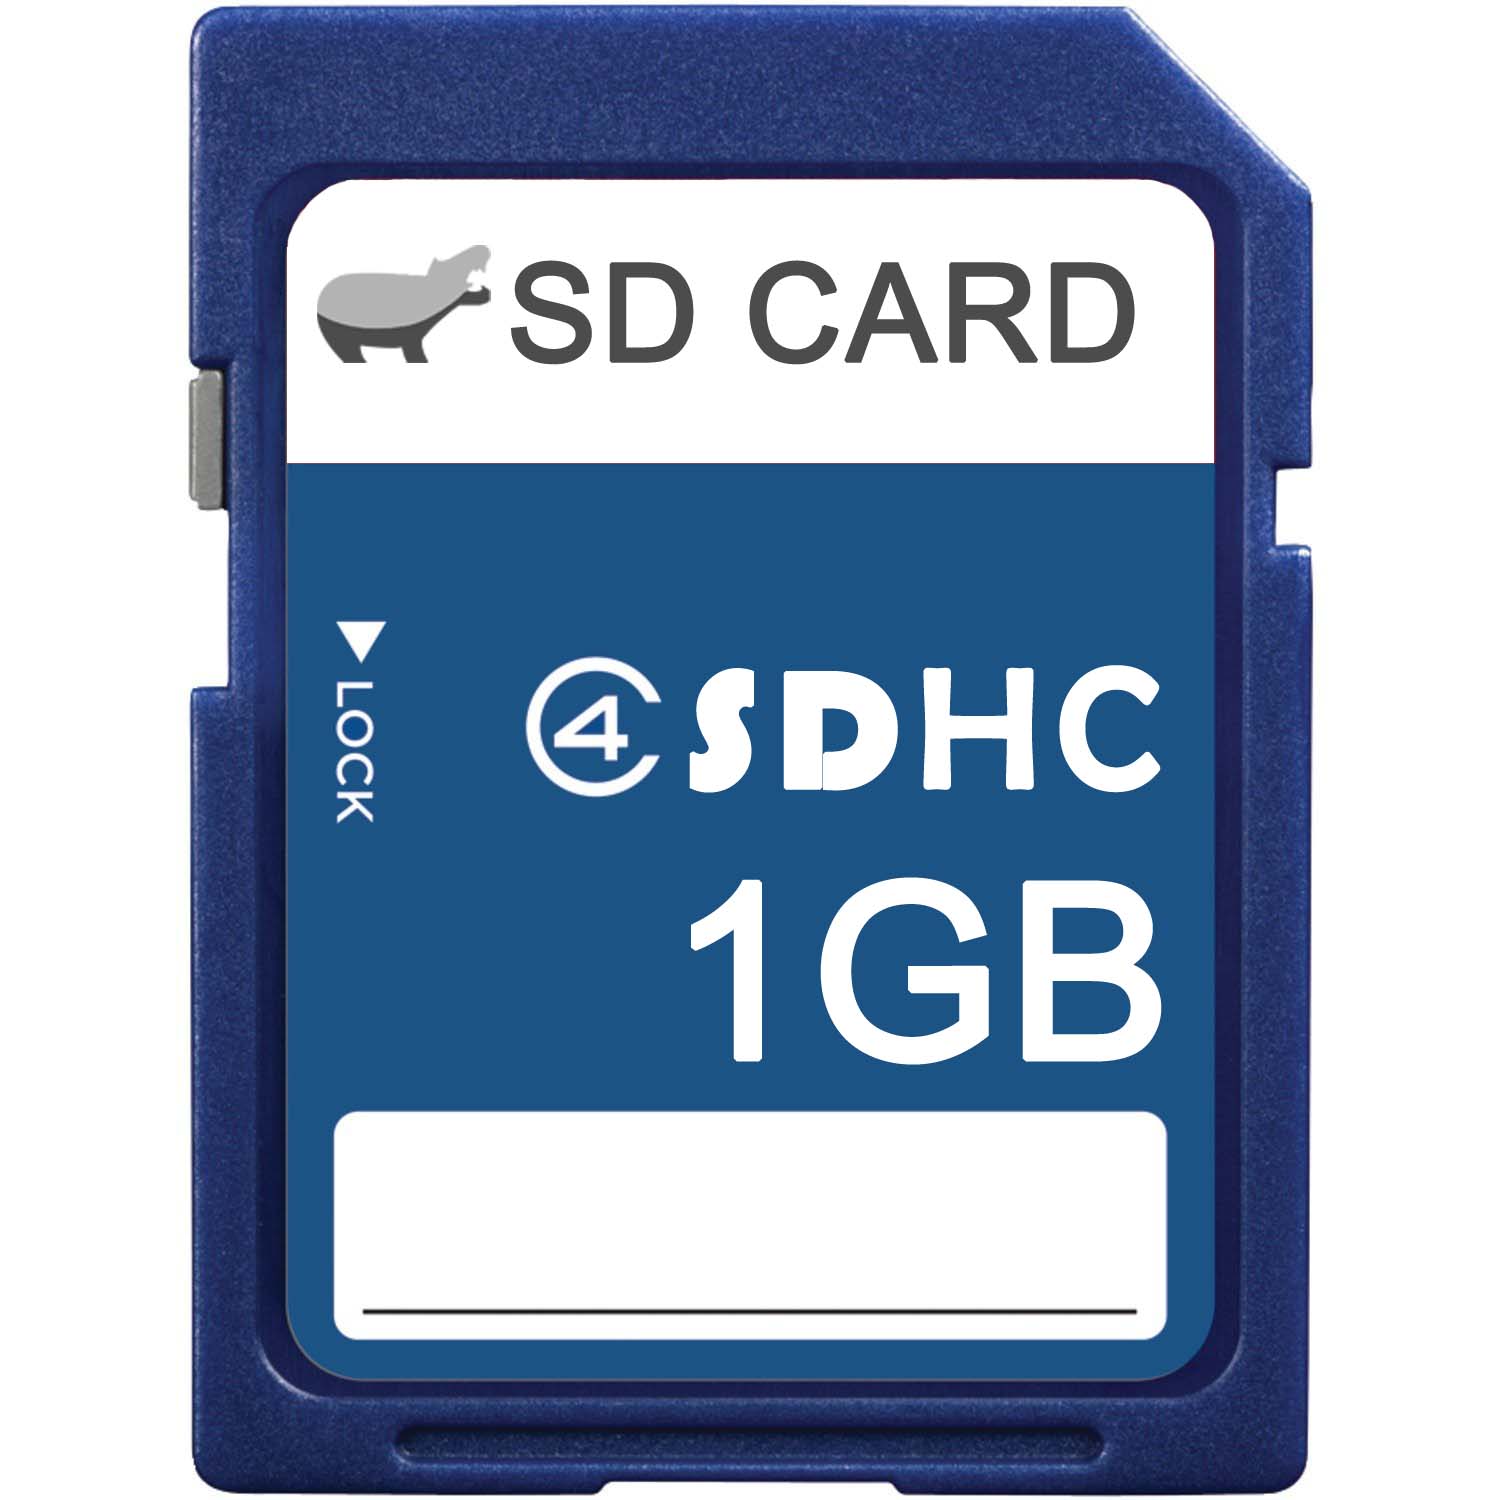 1GB C4 sd card